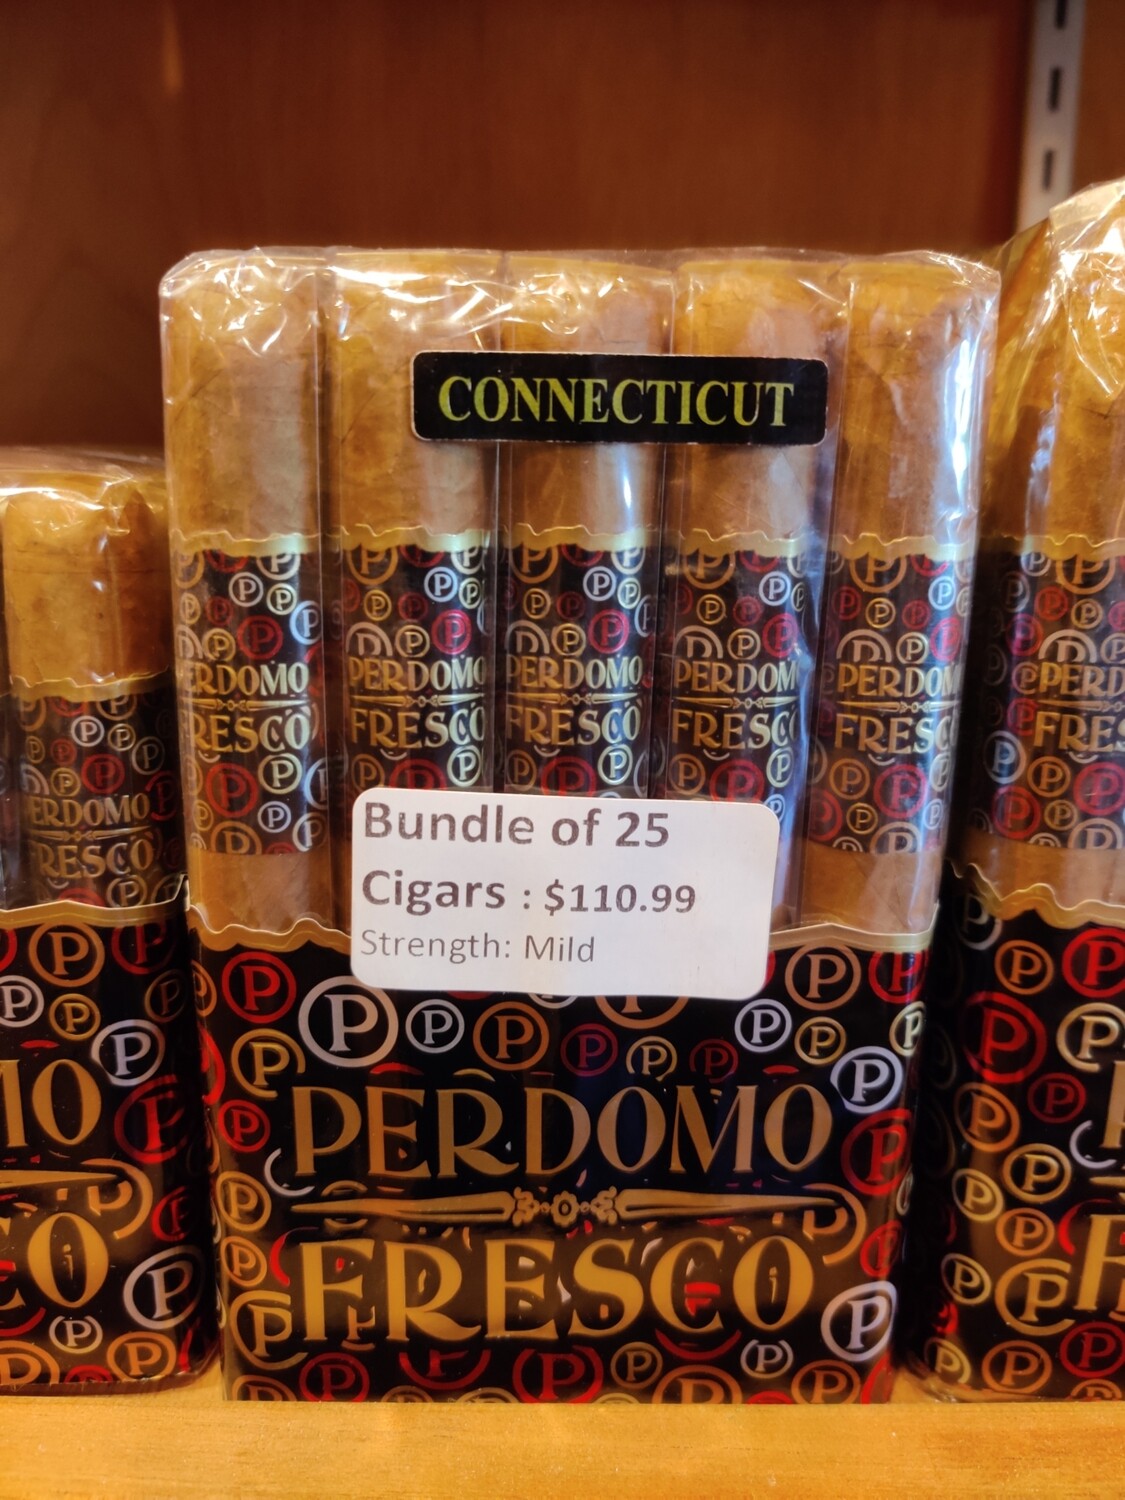 Perdomo Fresco Toro Connecticut 25 Cigar Bundle